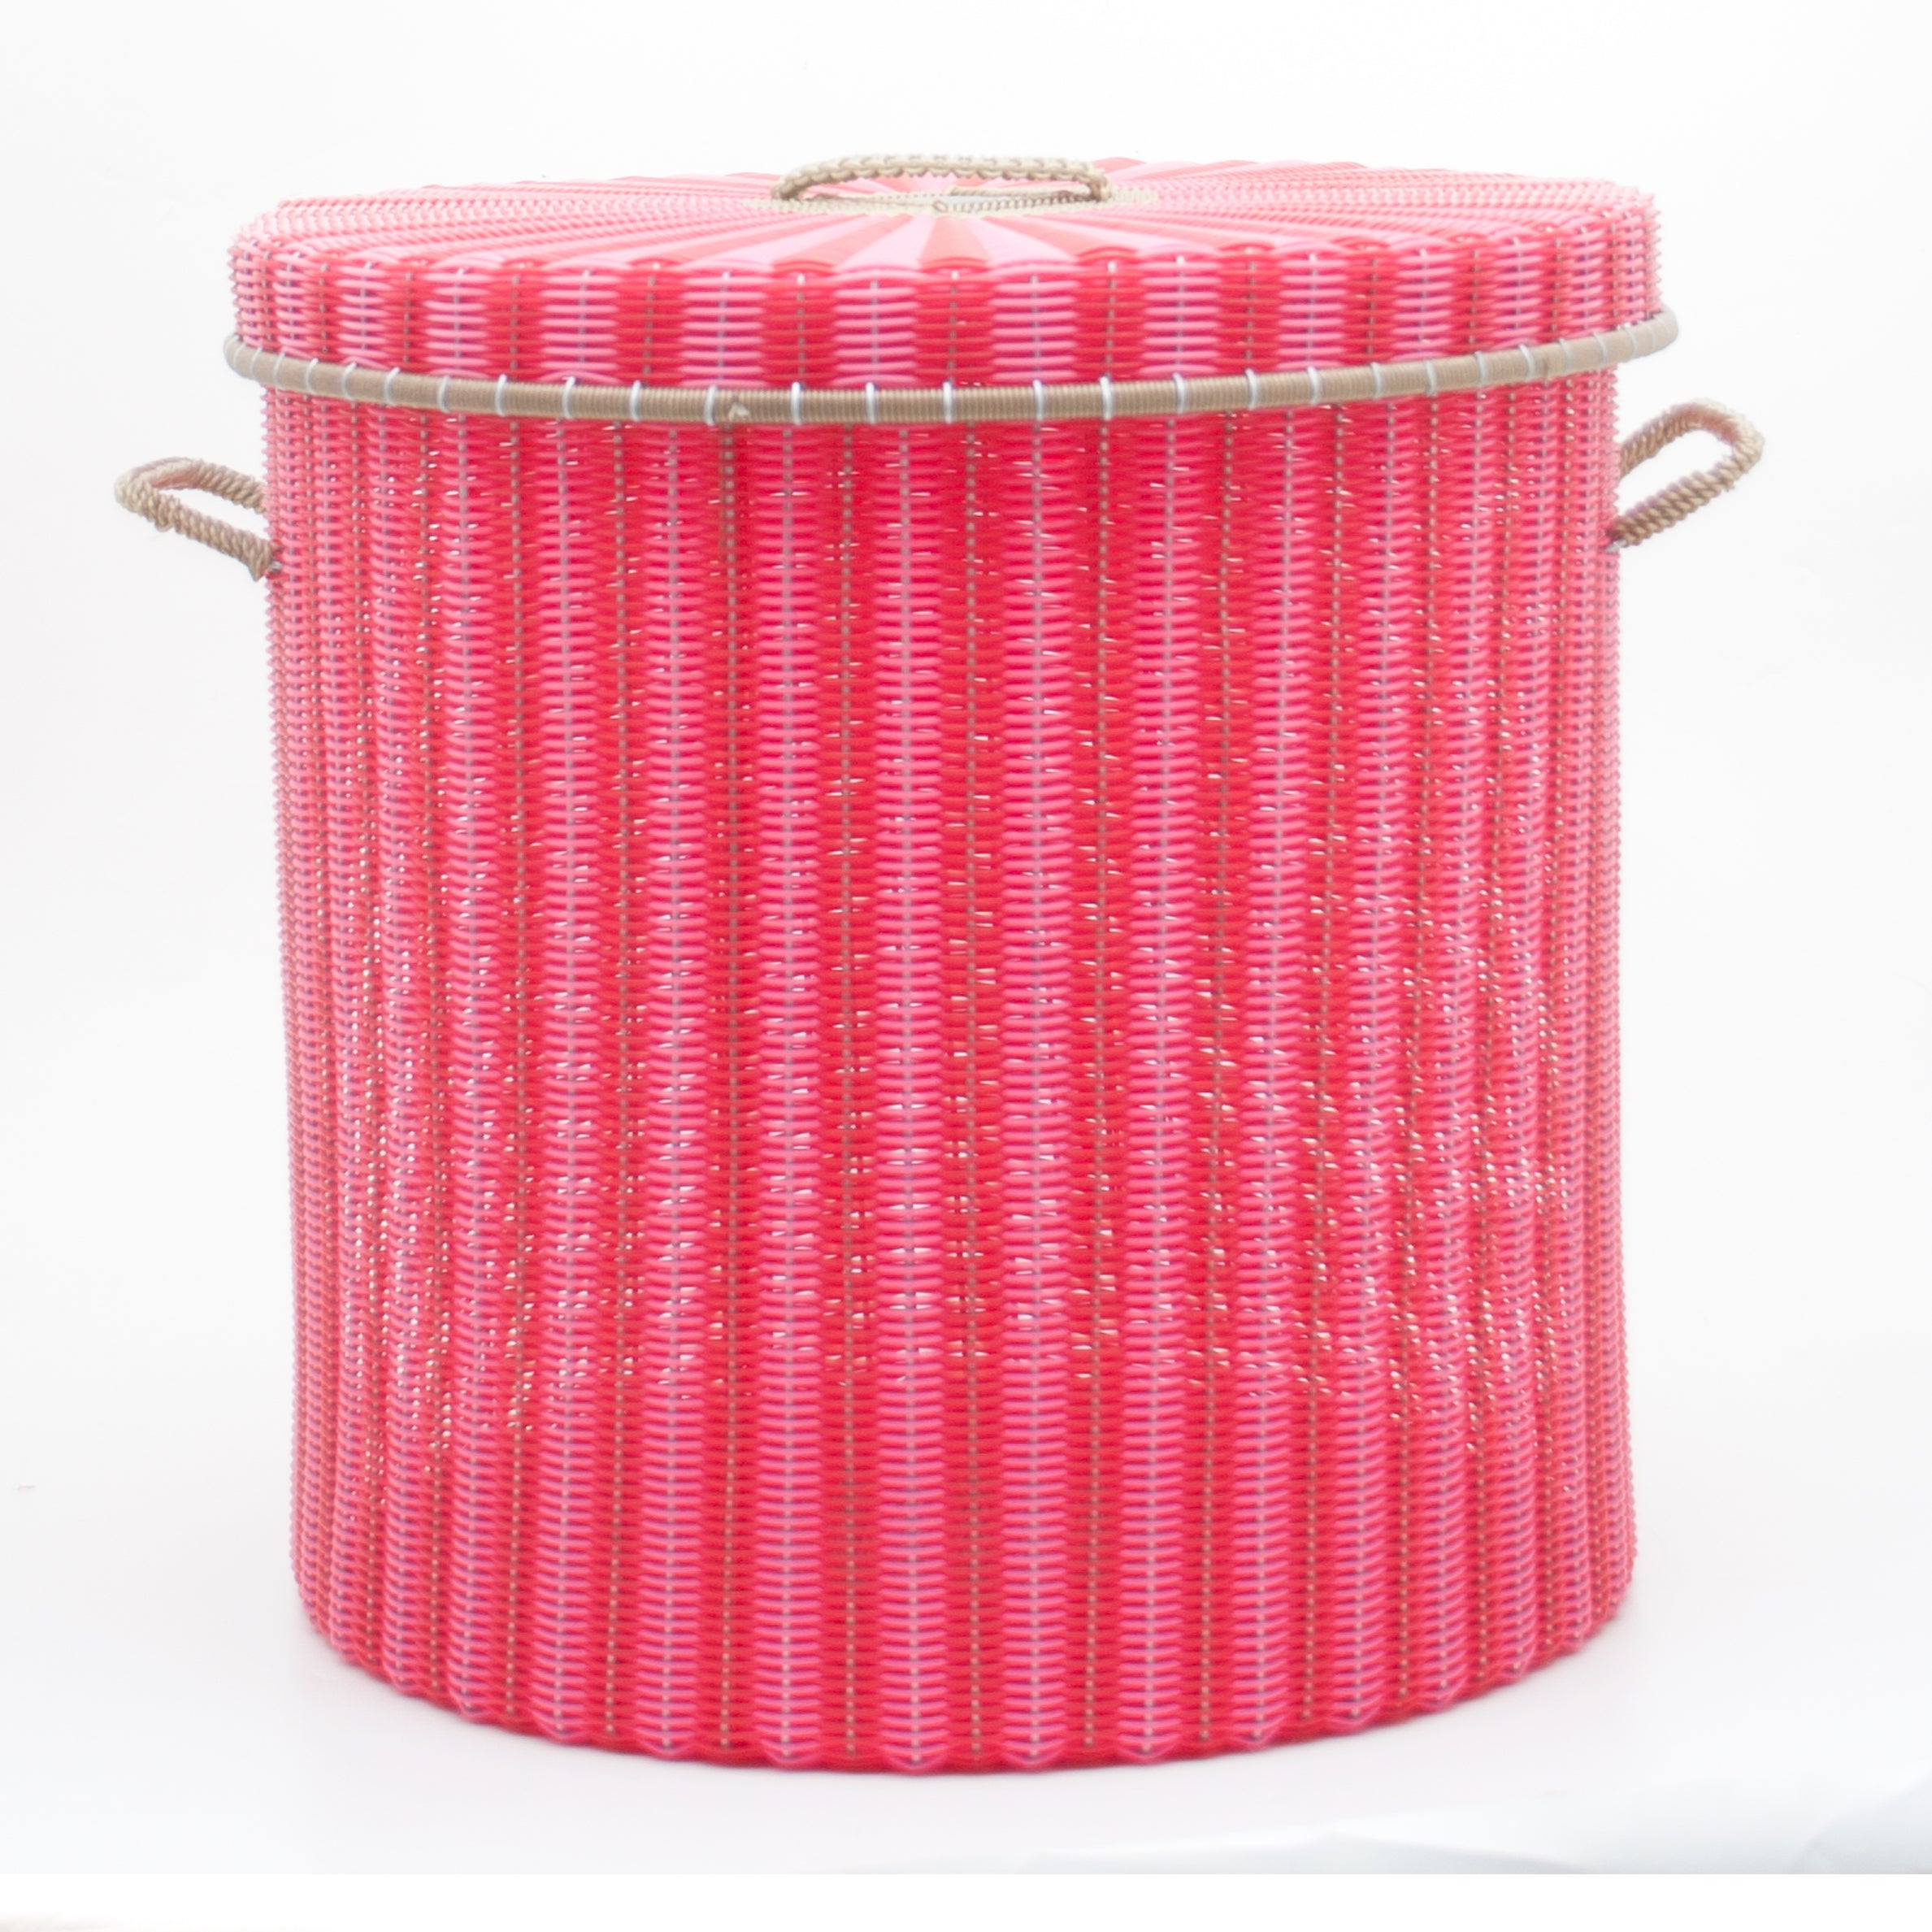 Red & pink storage basket